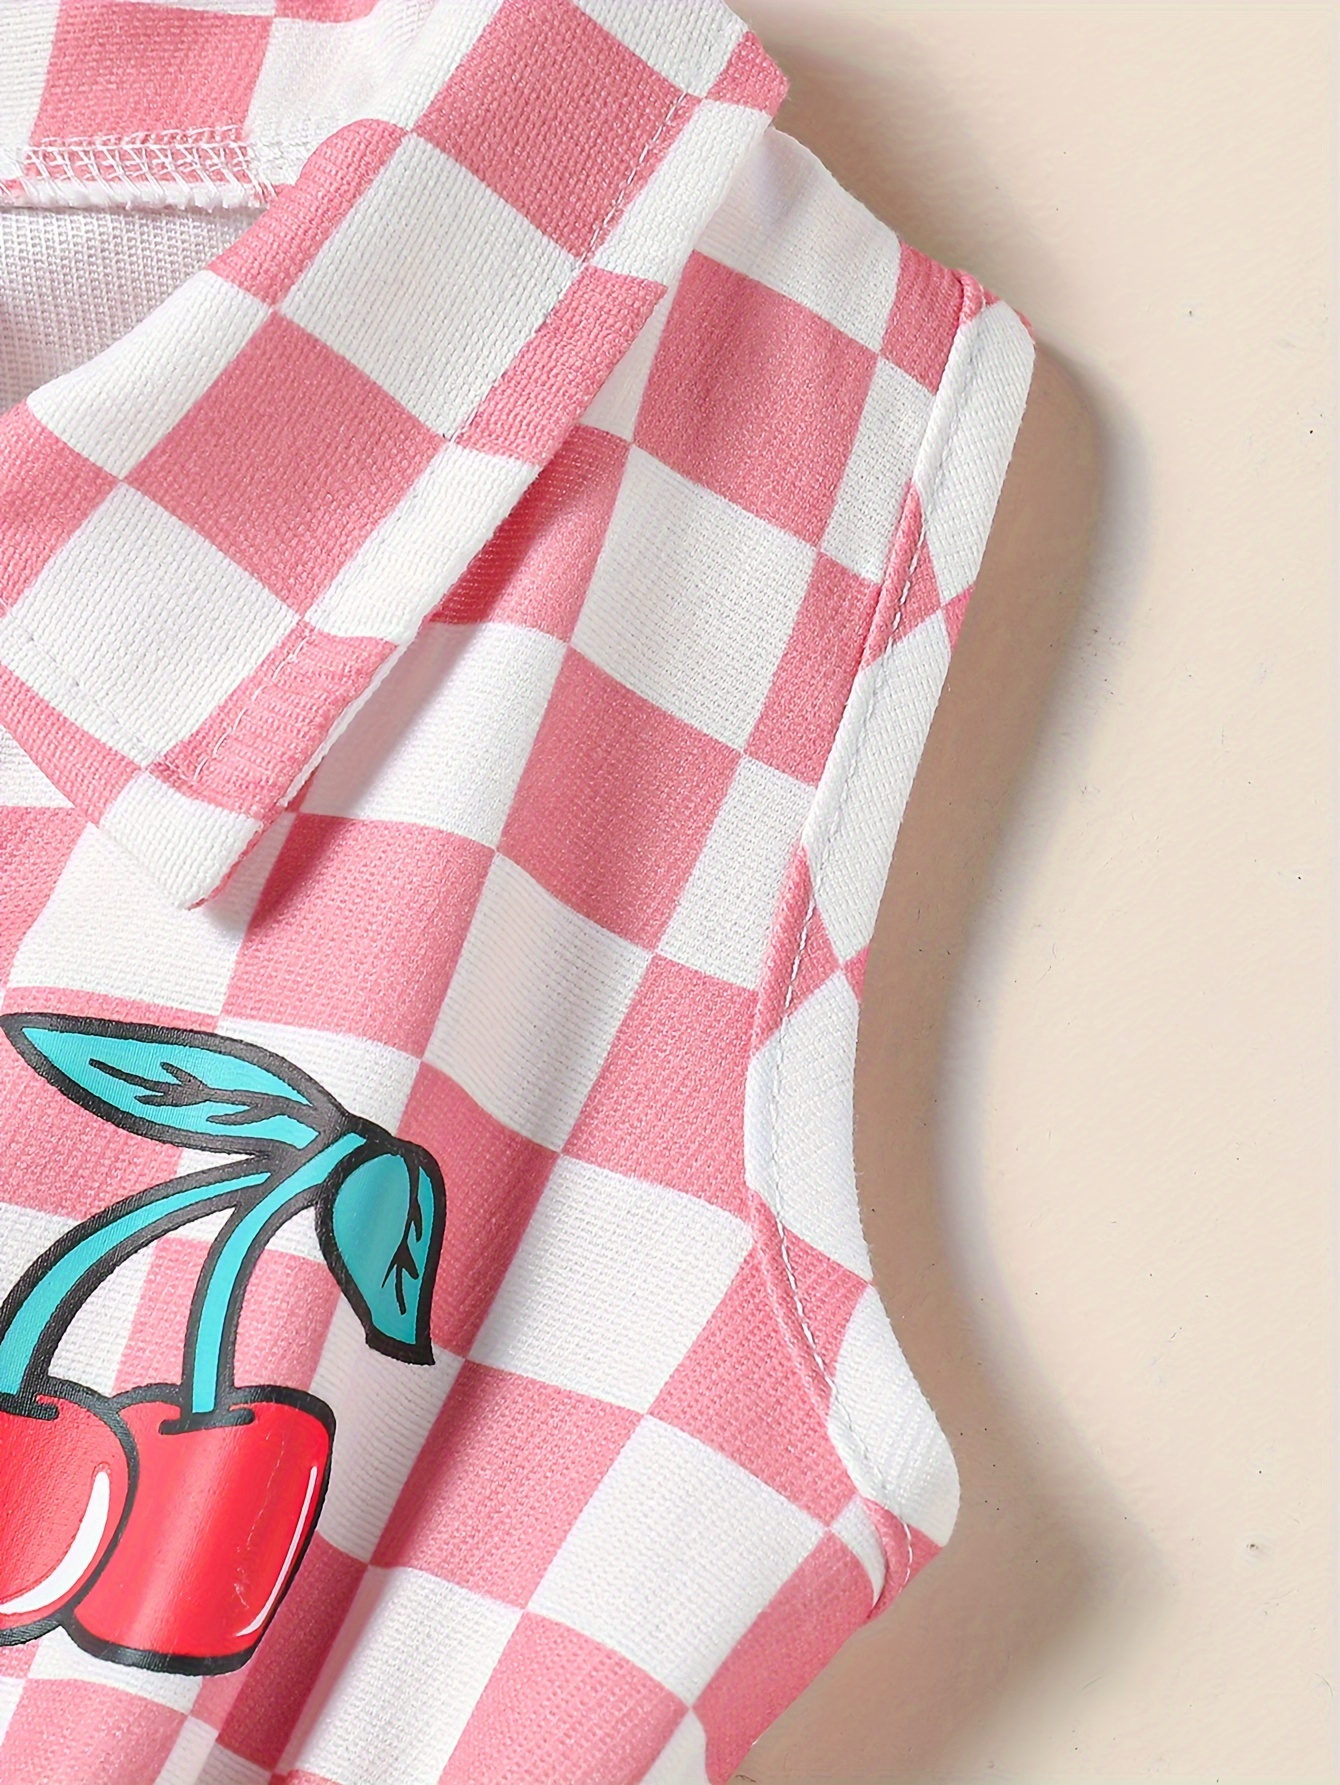 Sleeveless bodysuit- Cherry pattern